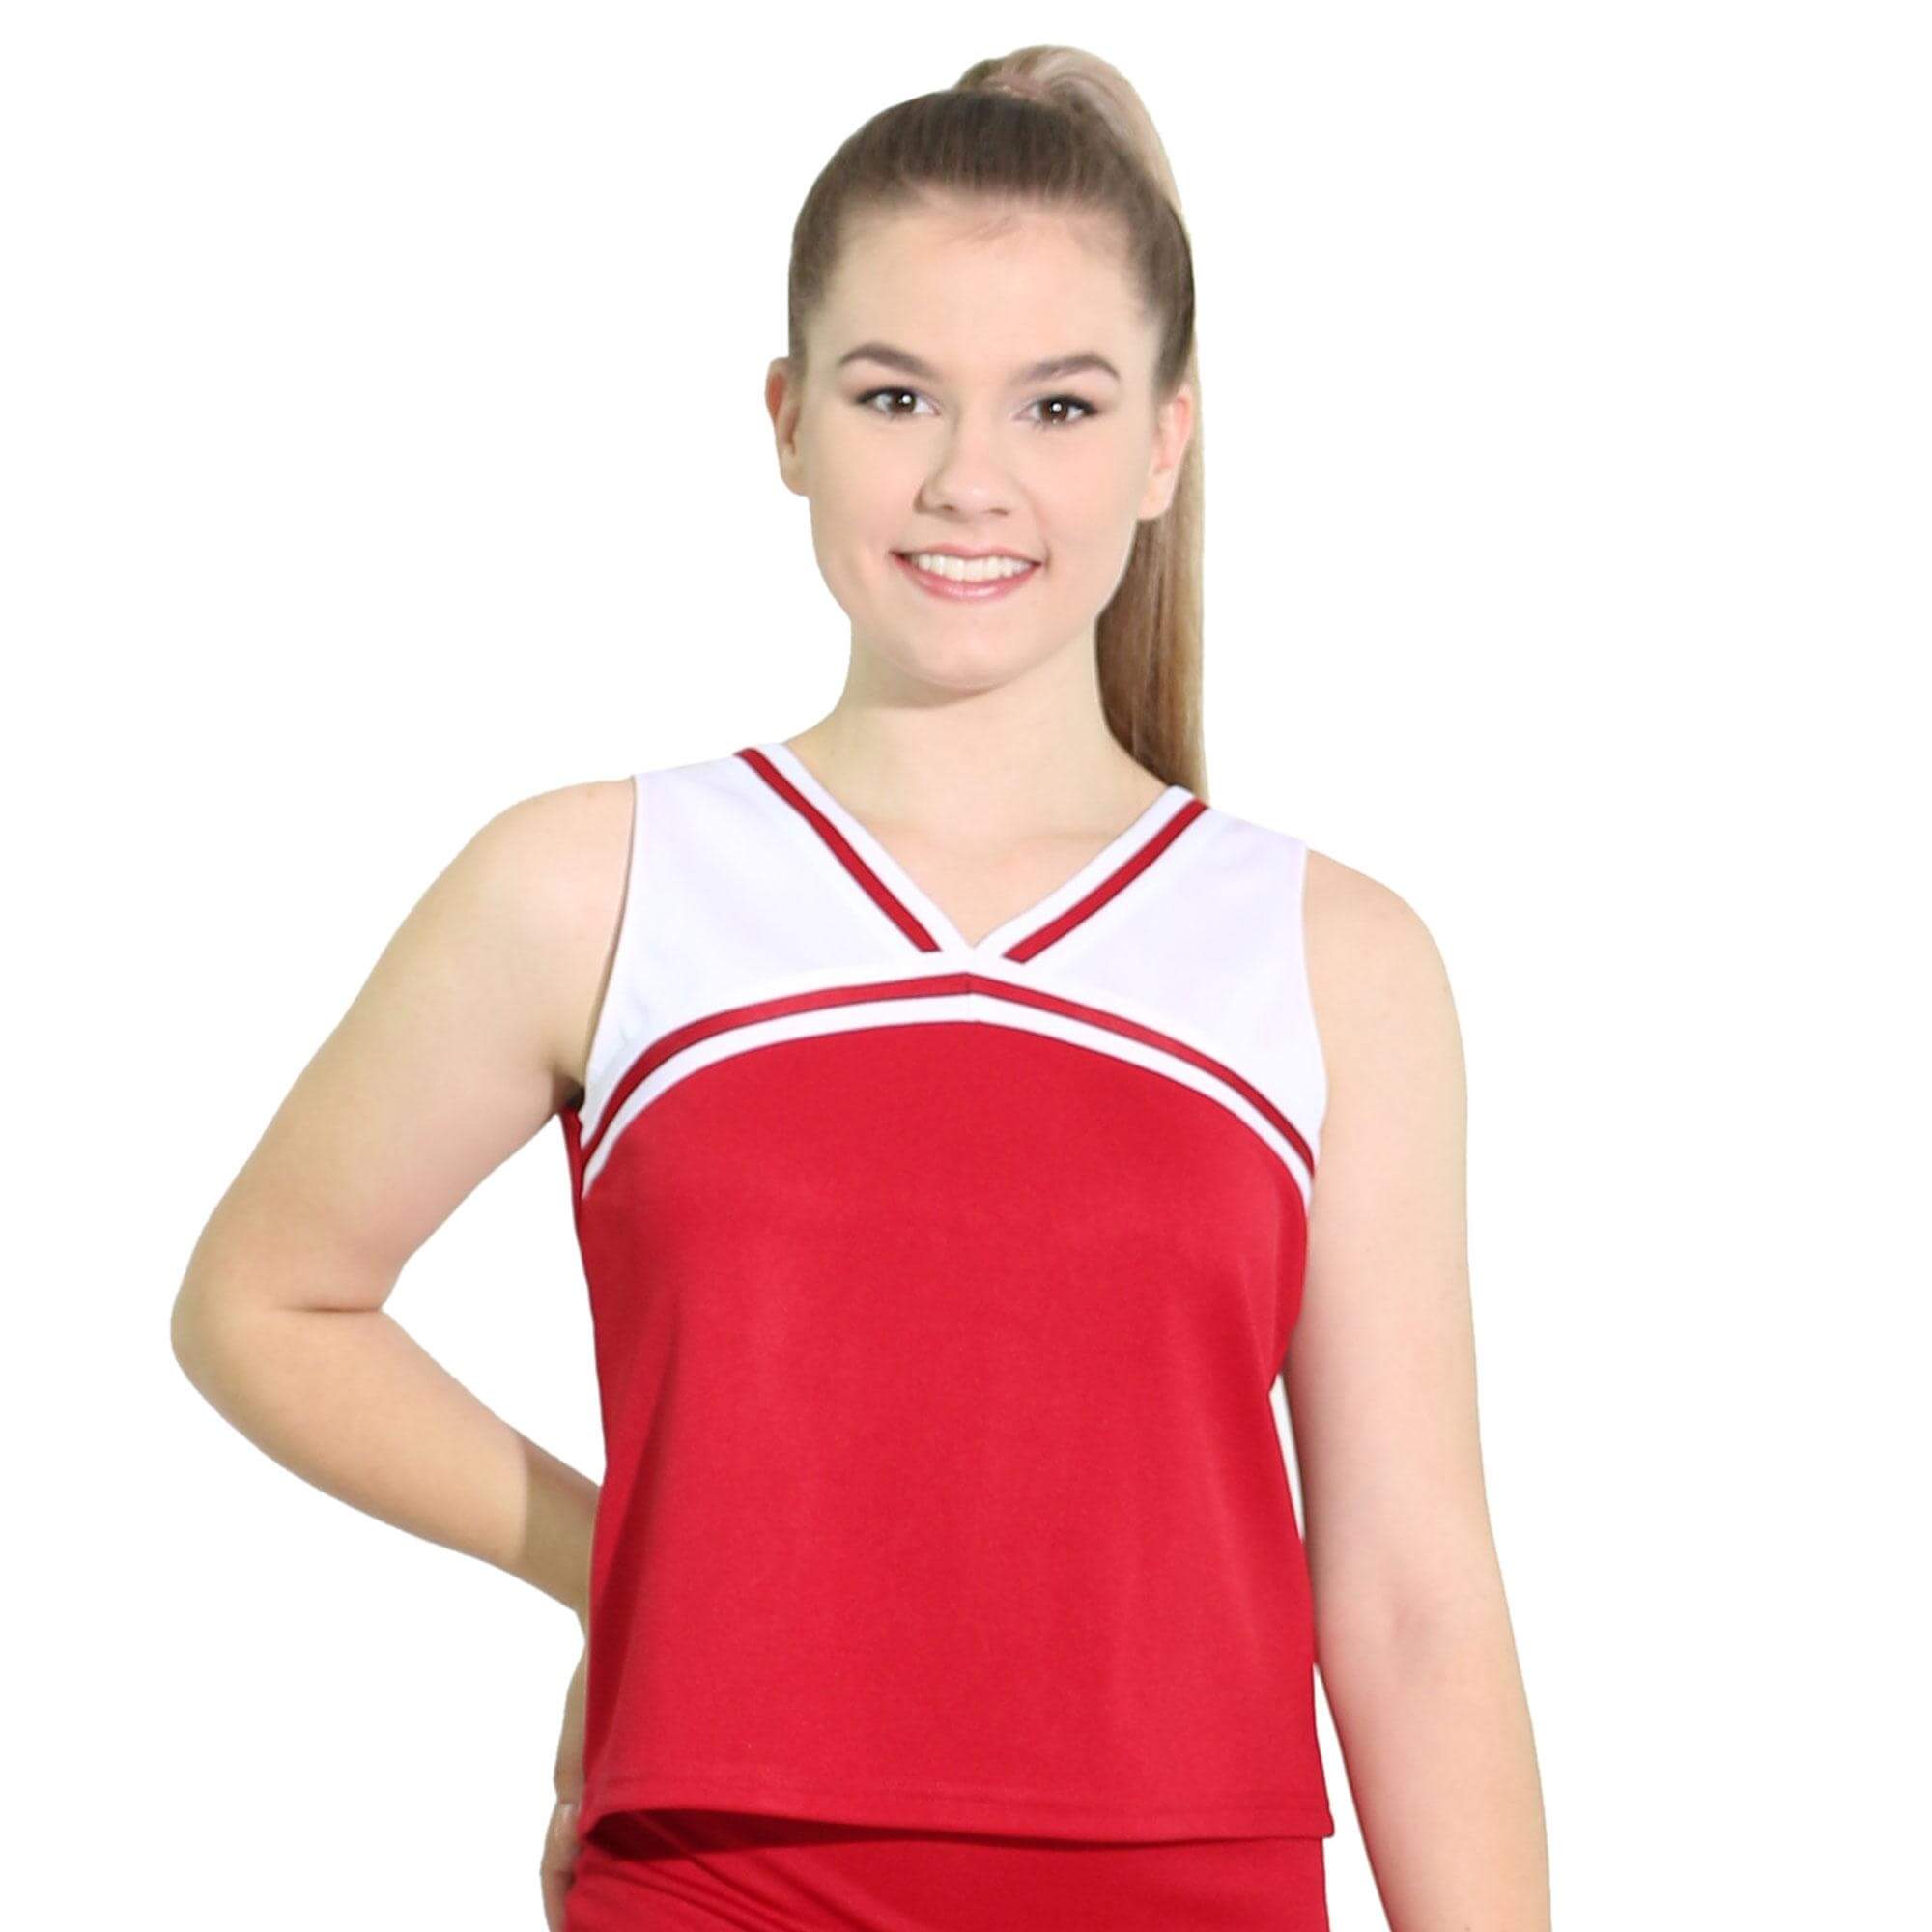 Danzcue Womens Sweetheart Cheerleaders Uniform Shell Top 